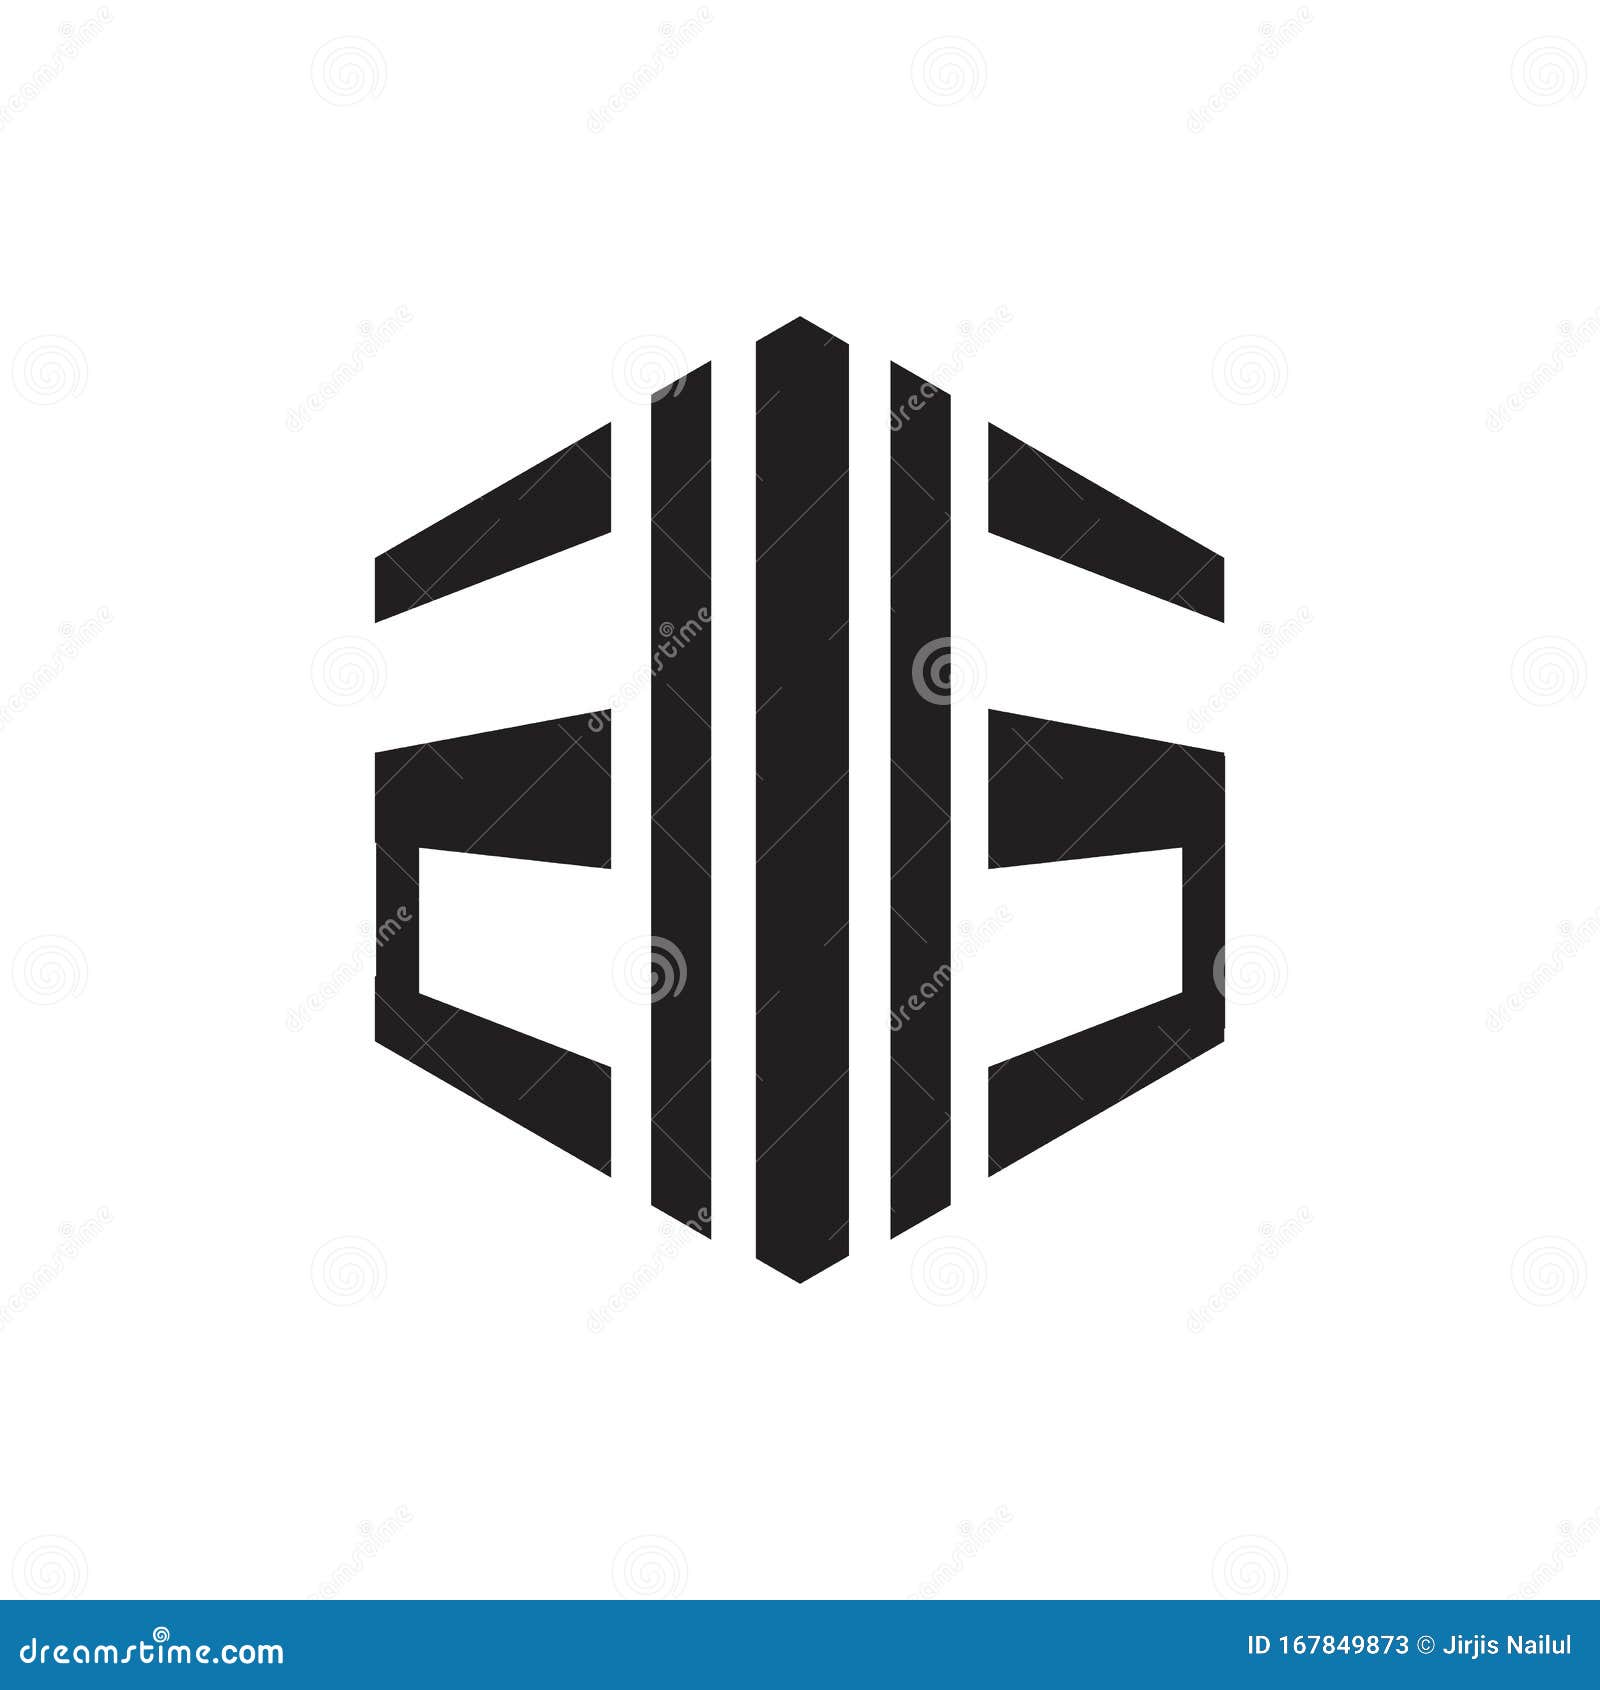 three letter logo ideas 6